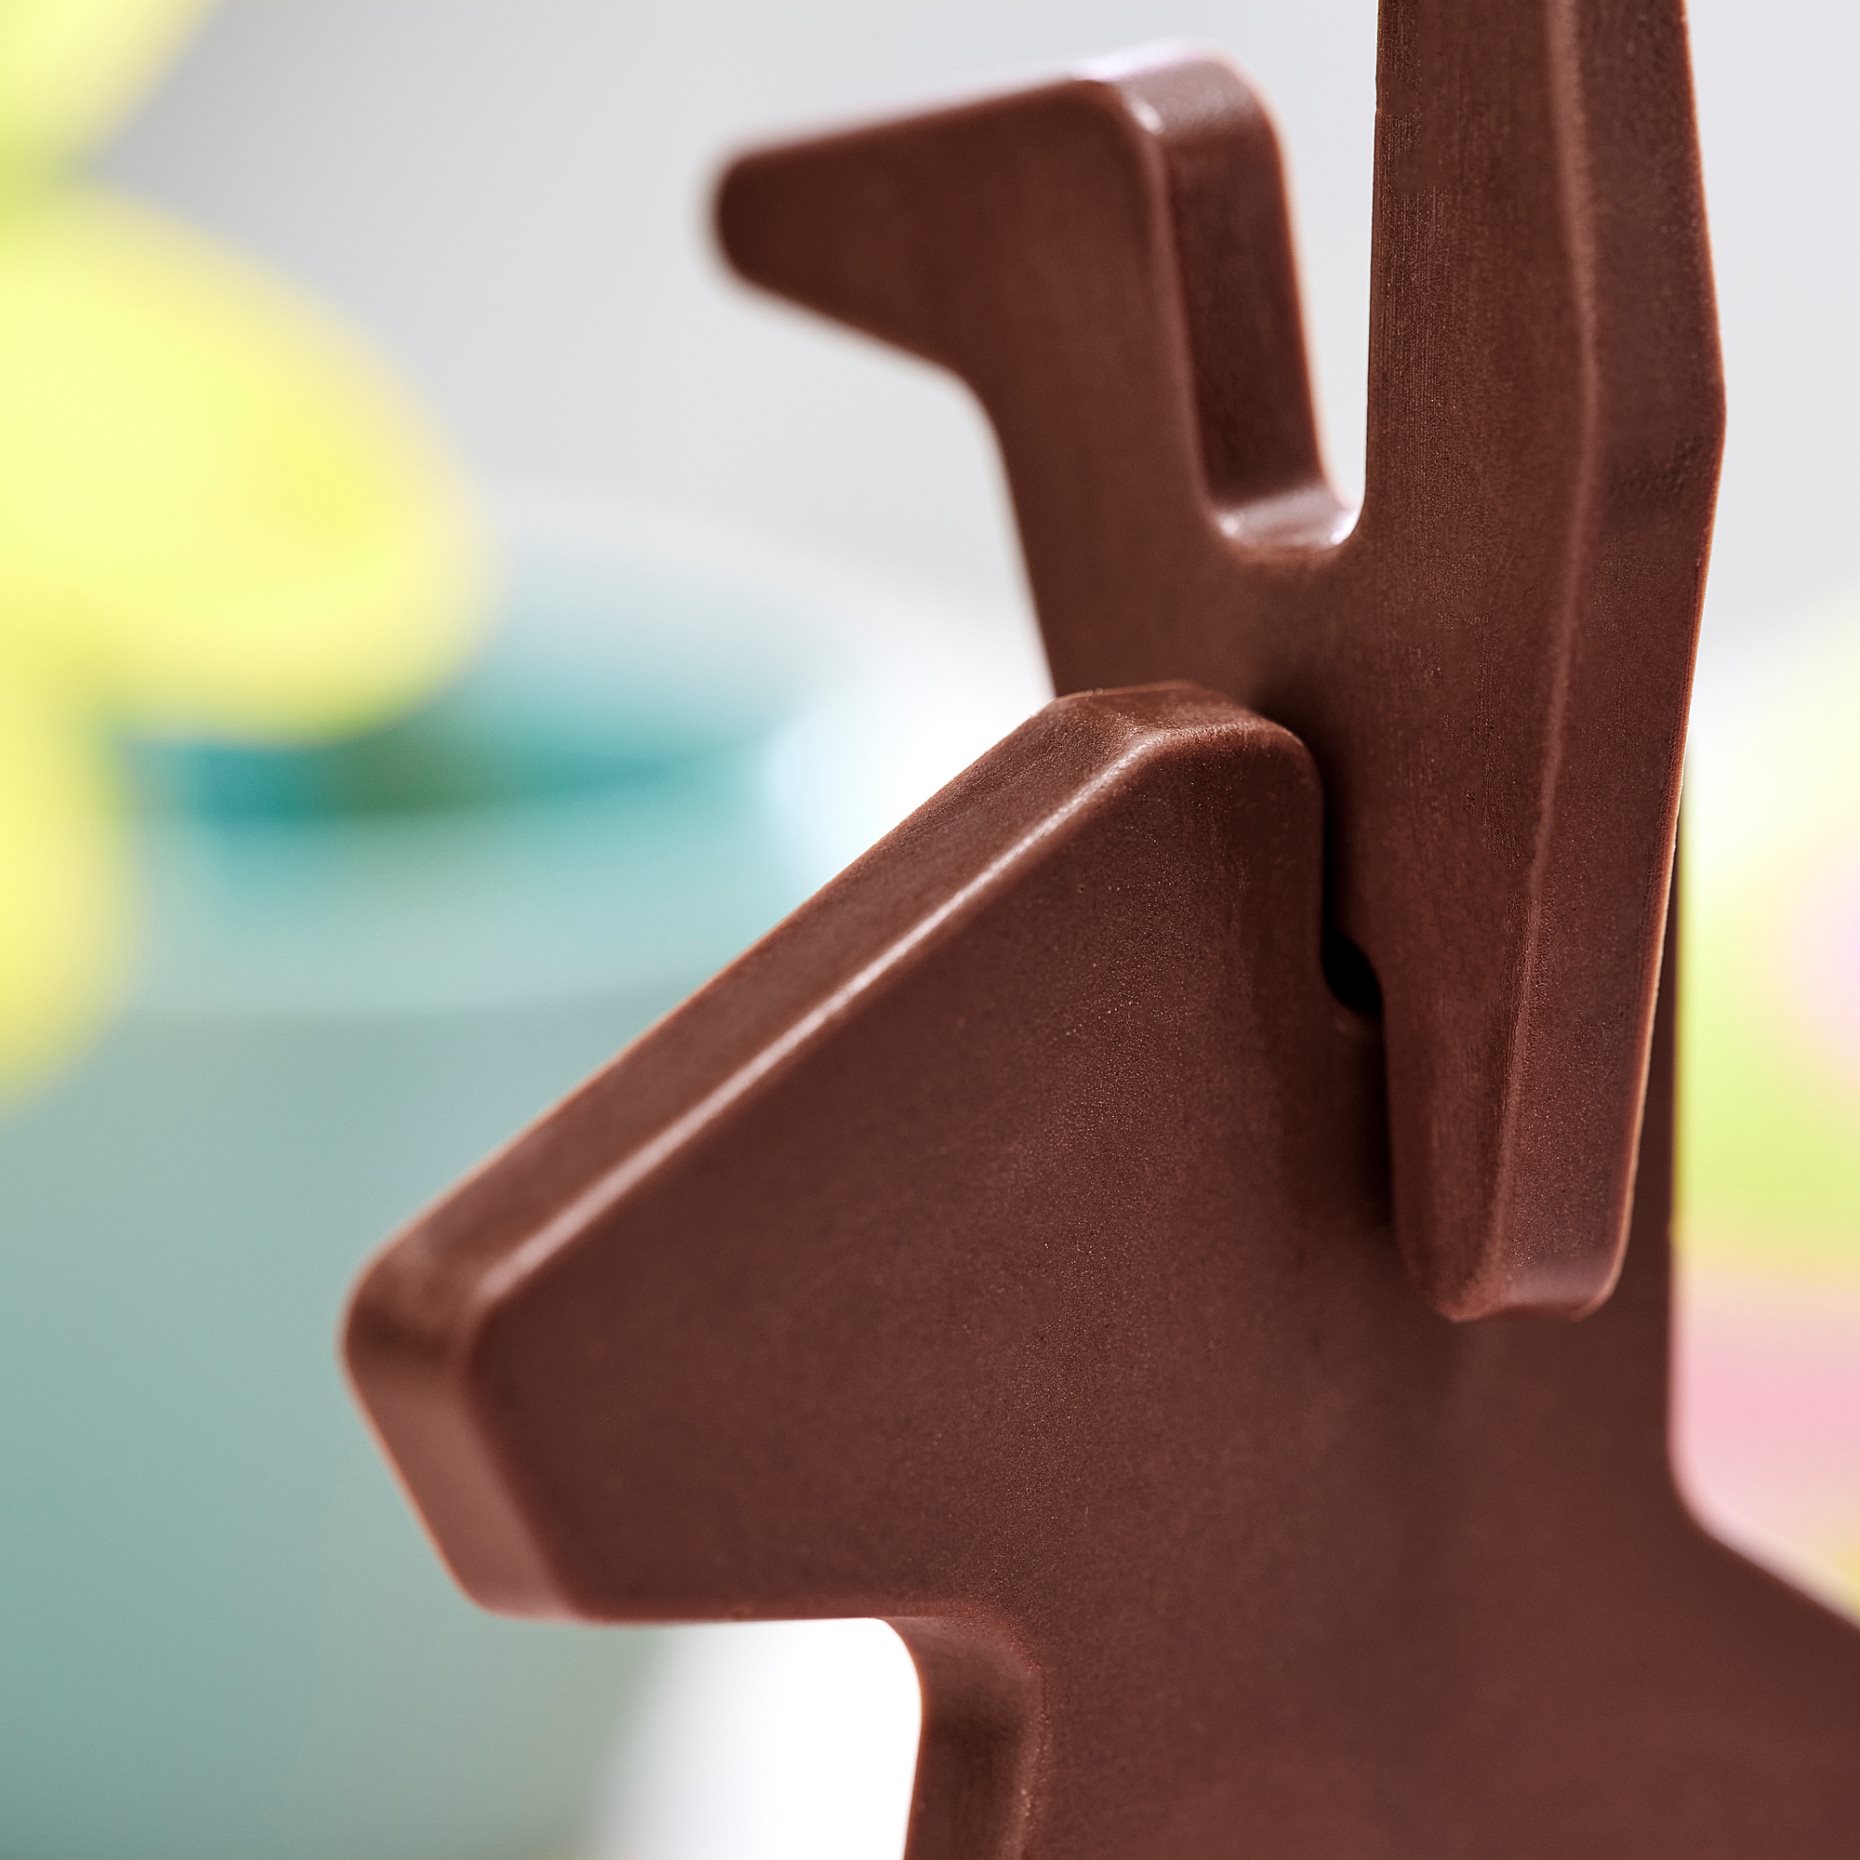 VÅRKÄNSLA, milk chocolate bunny/self-assembly/Rainforest Alliance Certified, 90 g, 905.463.36